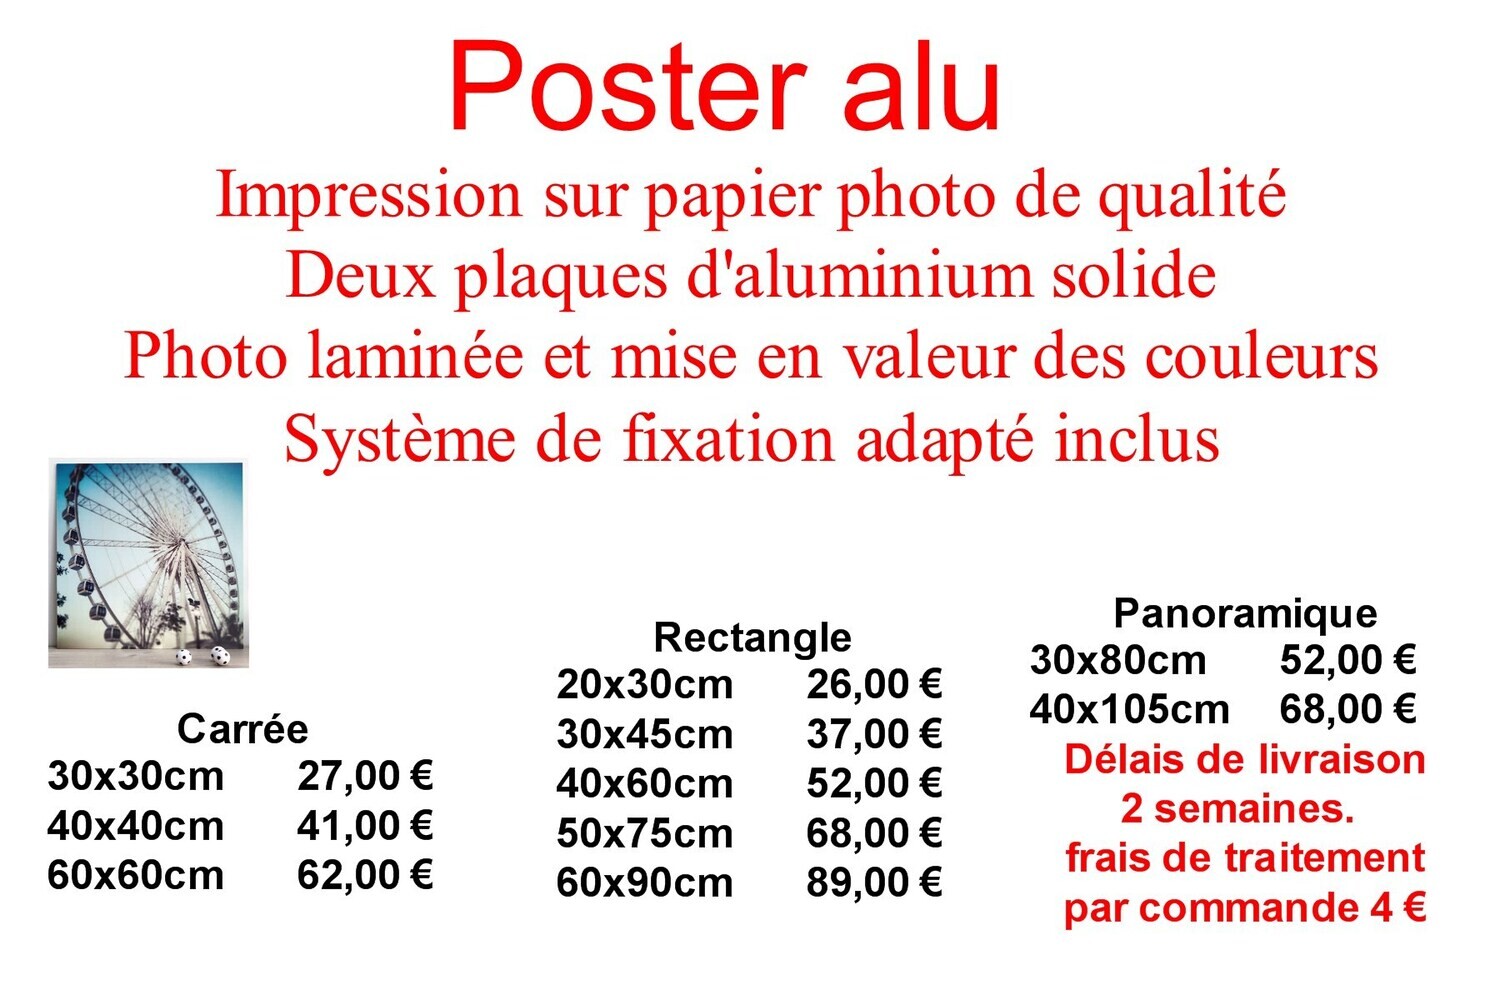 Poster alu à partir de 30.00 €